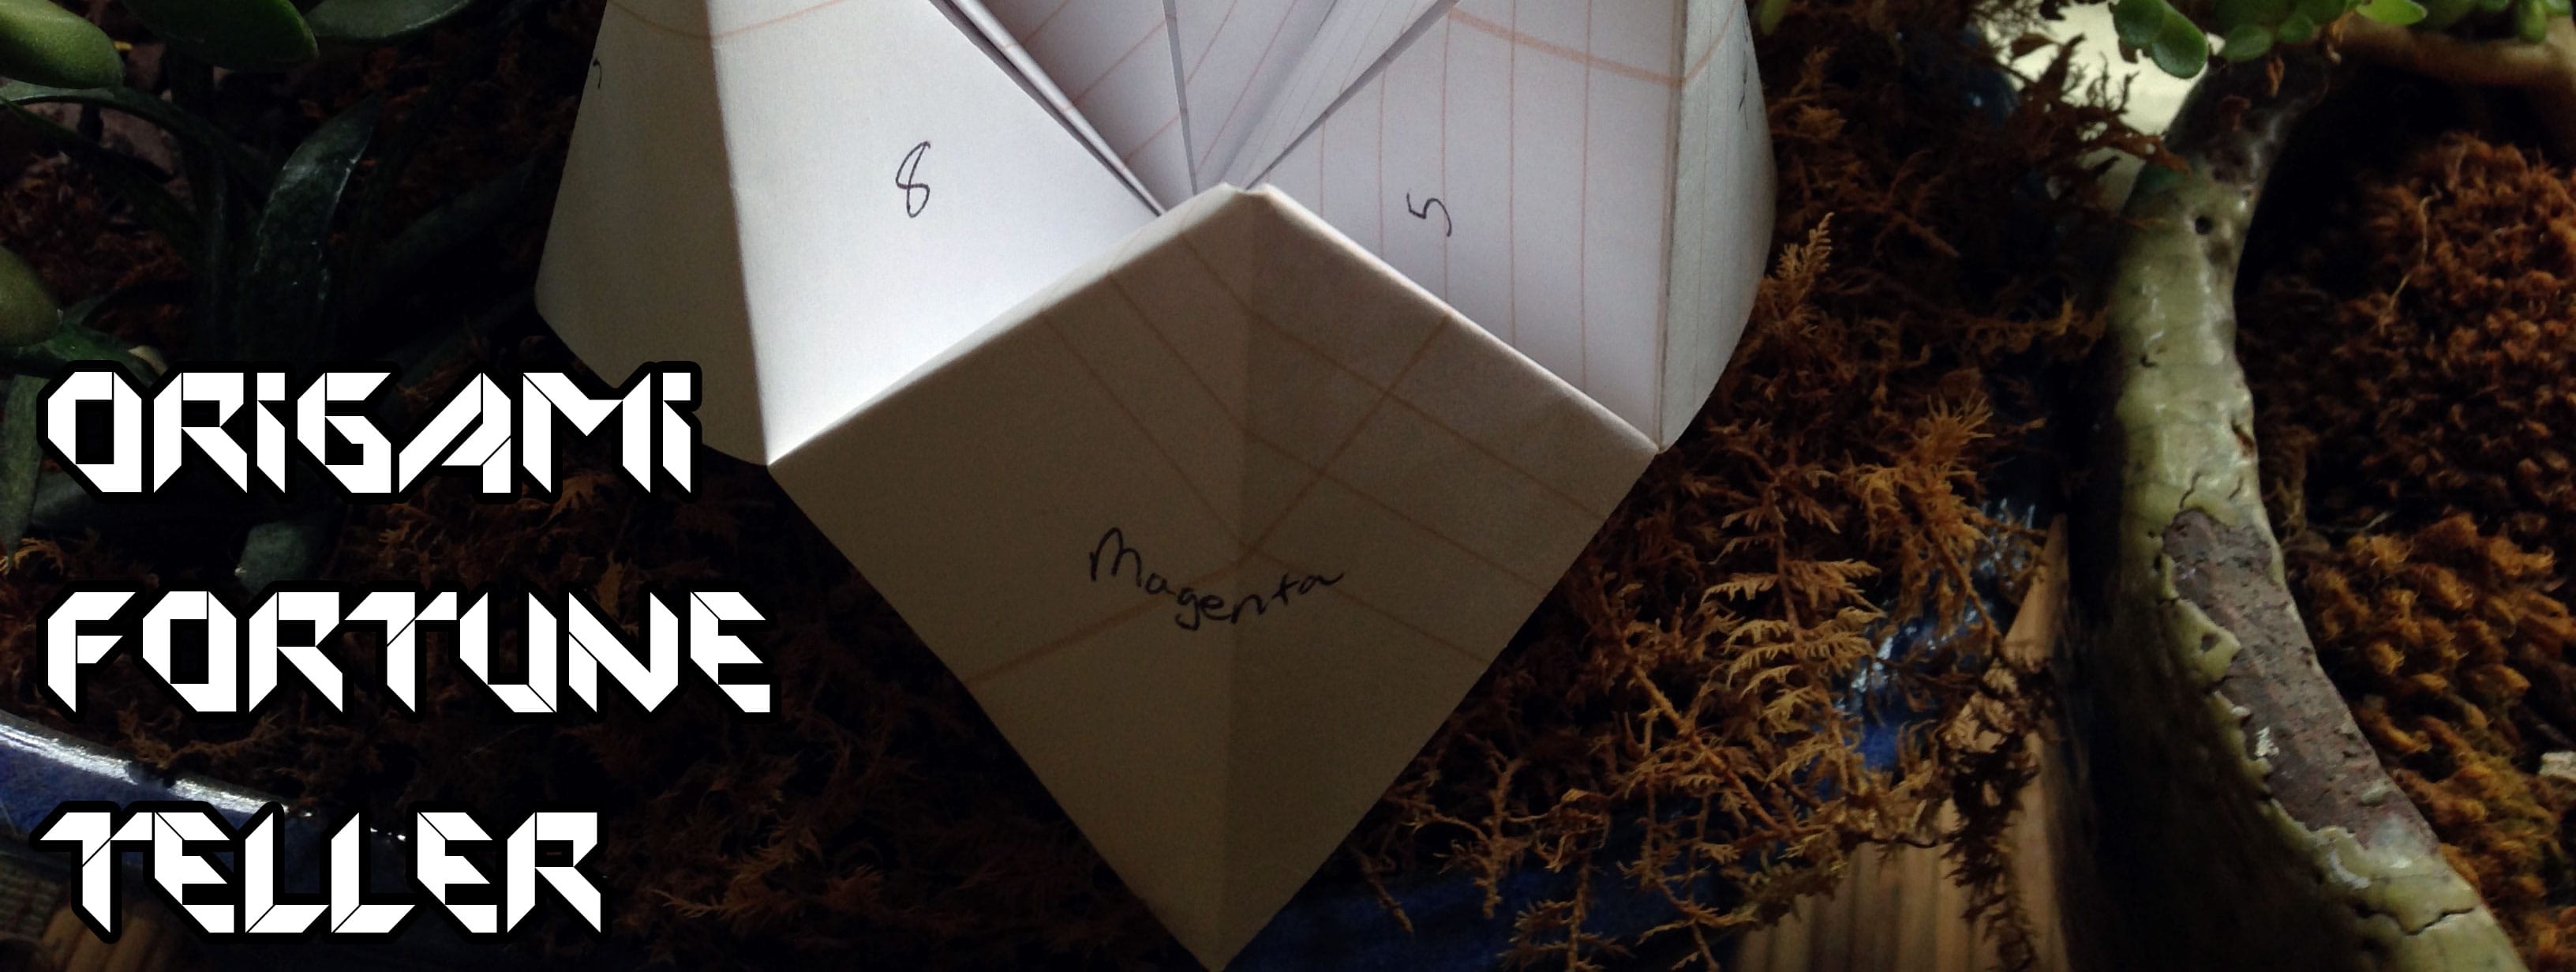 Origami Fortune Teller Tutorial on Katie Crafts https://www.katiecrafts.com